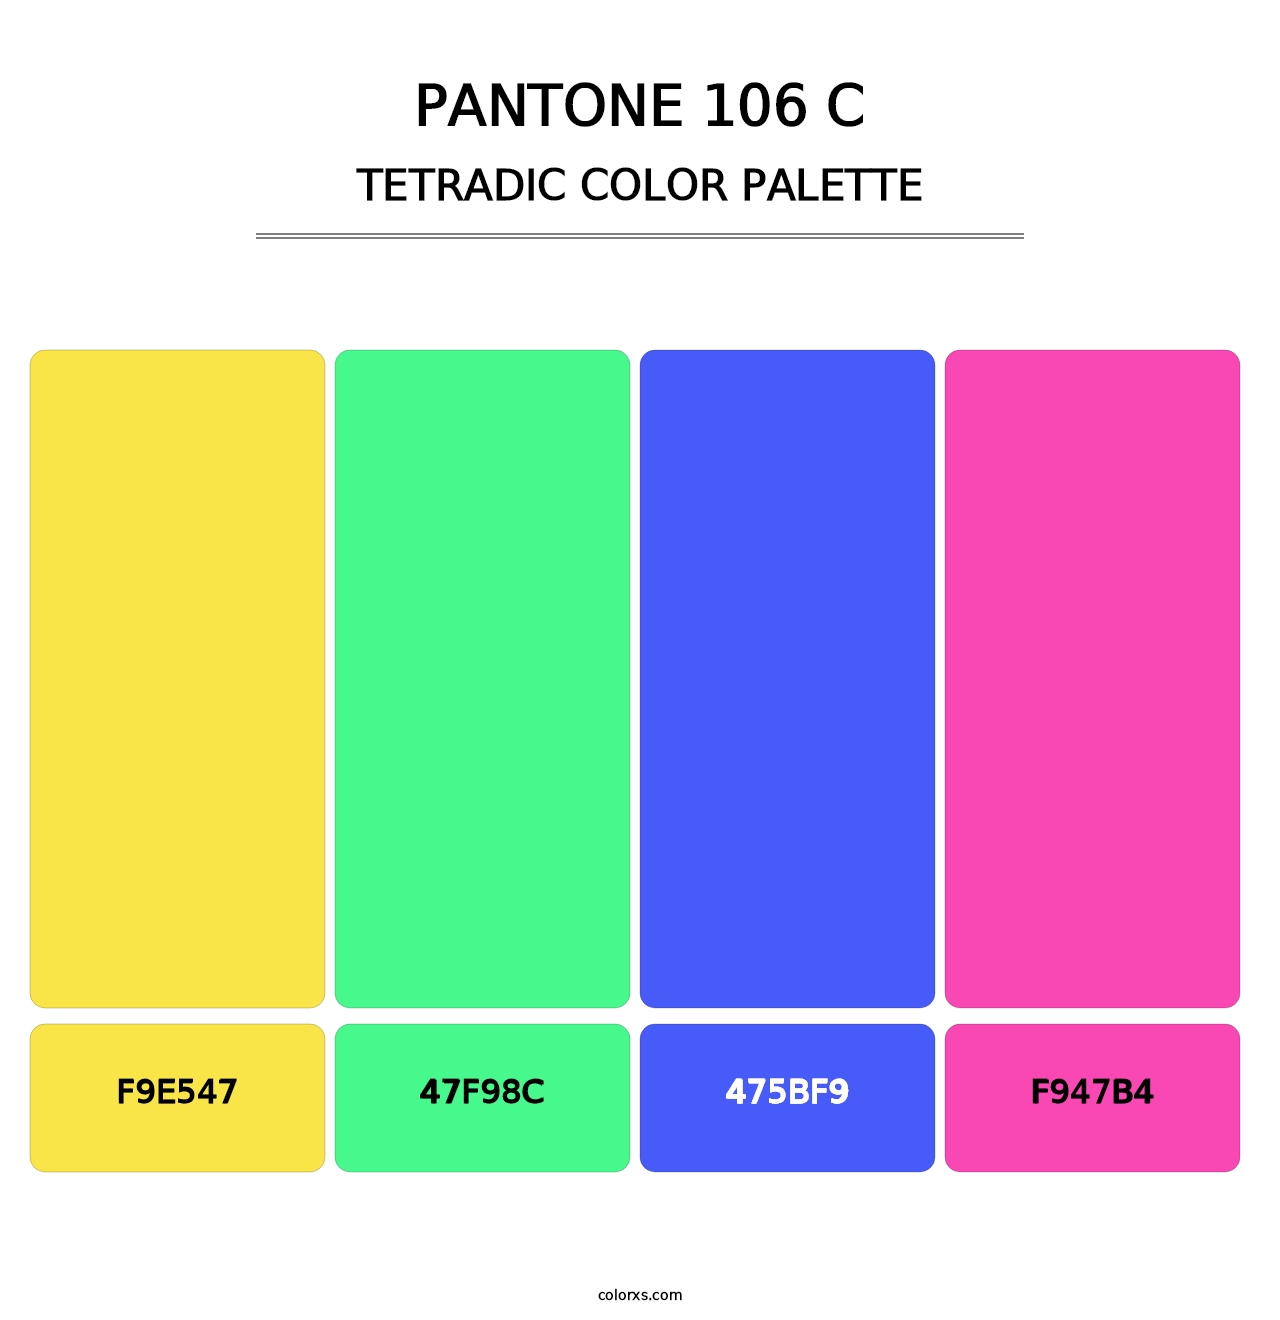 PANTONE 106 C - Tetradic Color Palette